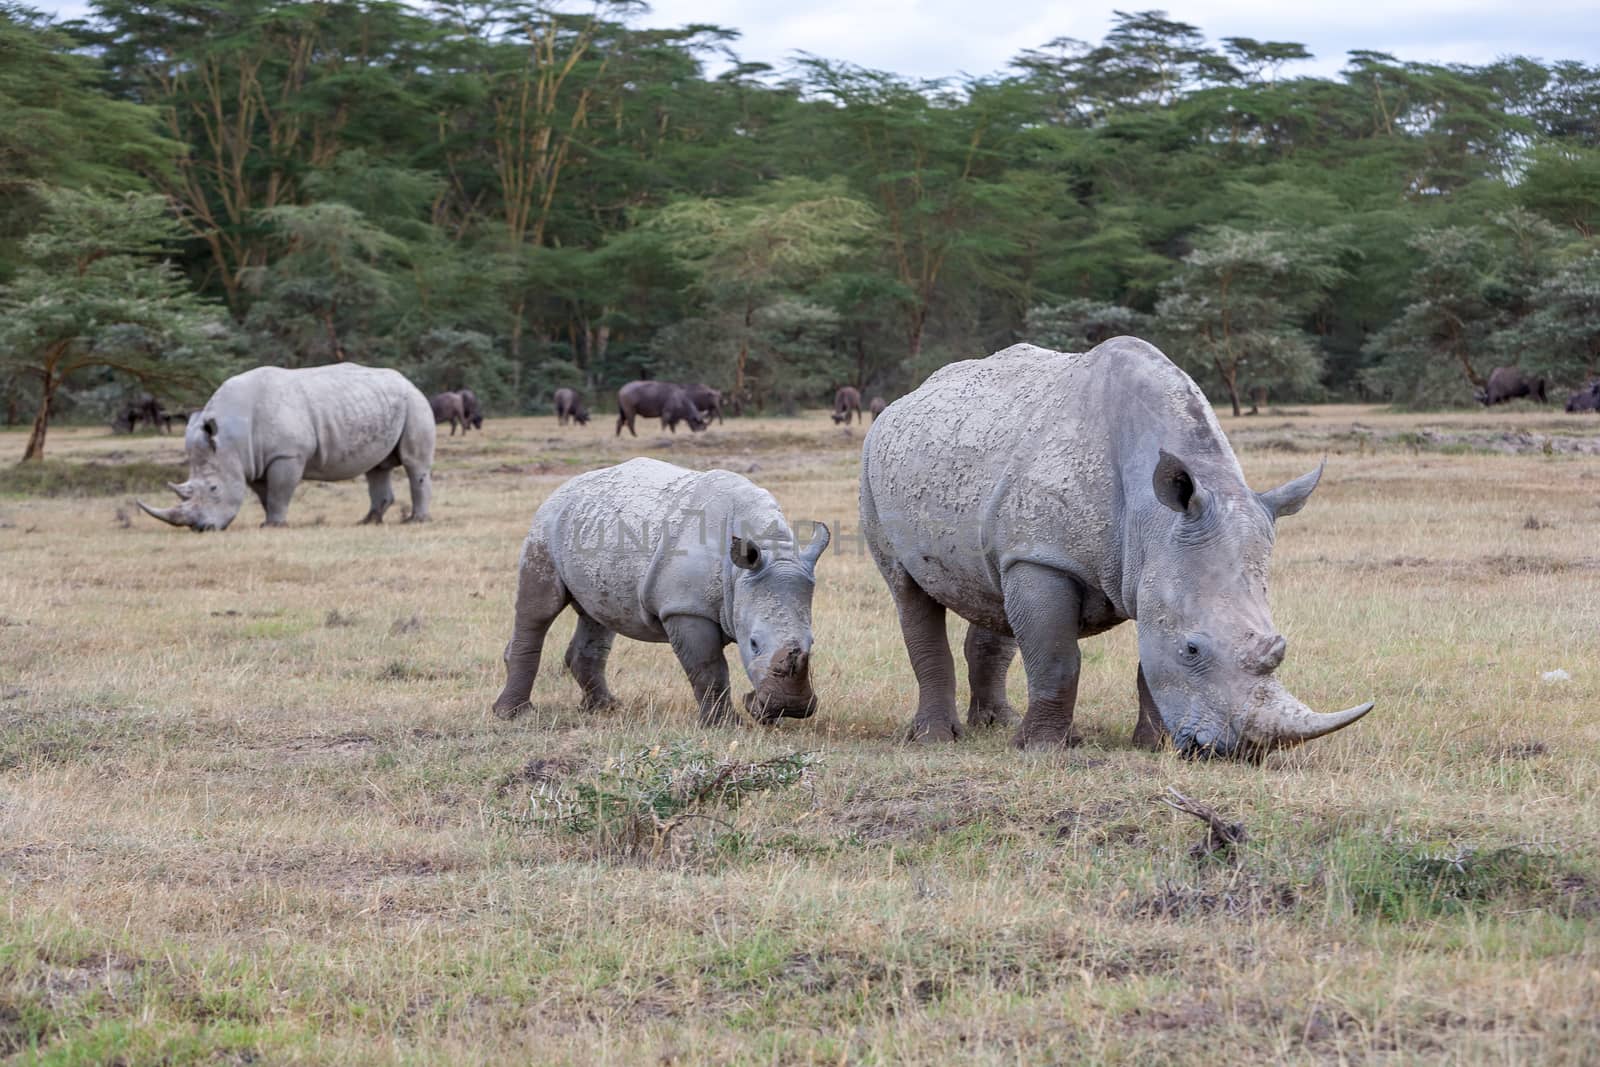 Safari - rhinos on the background of savanna